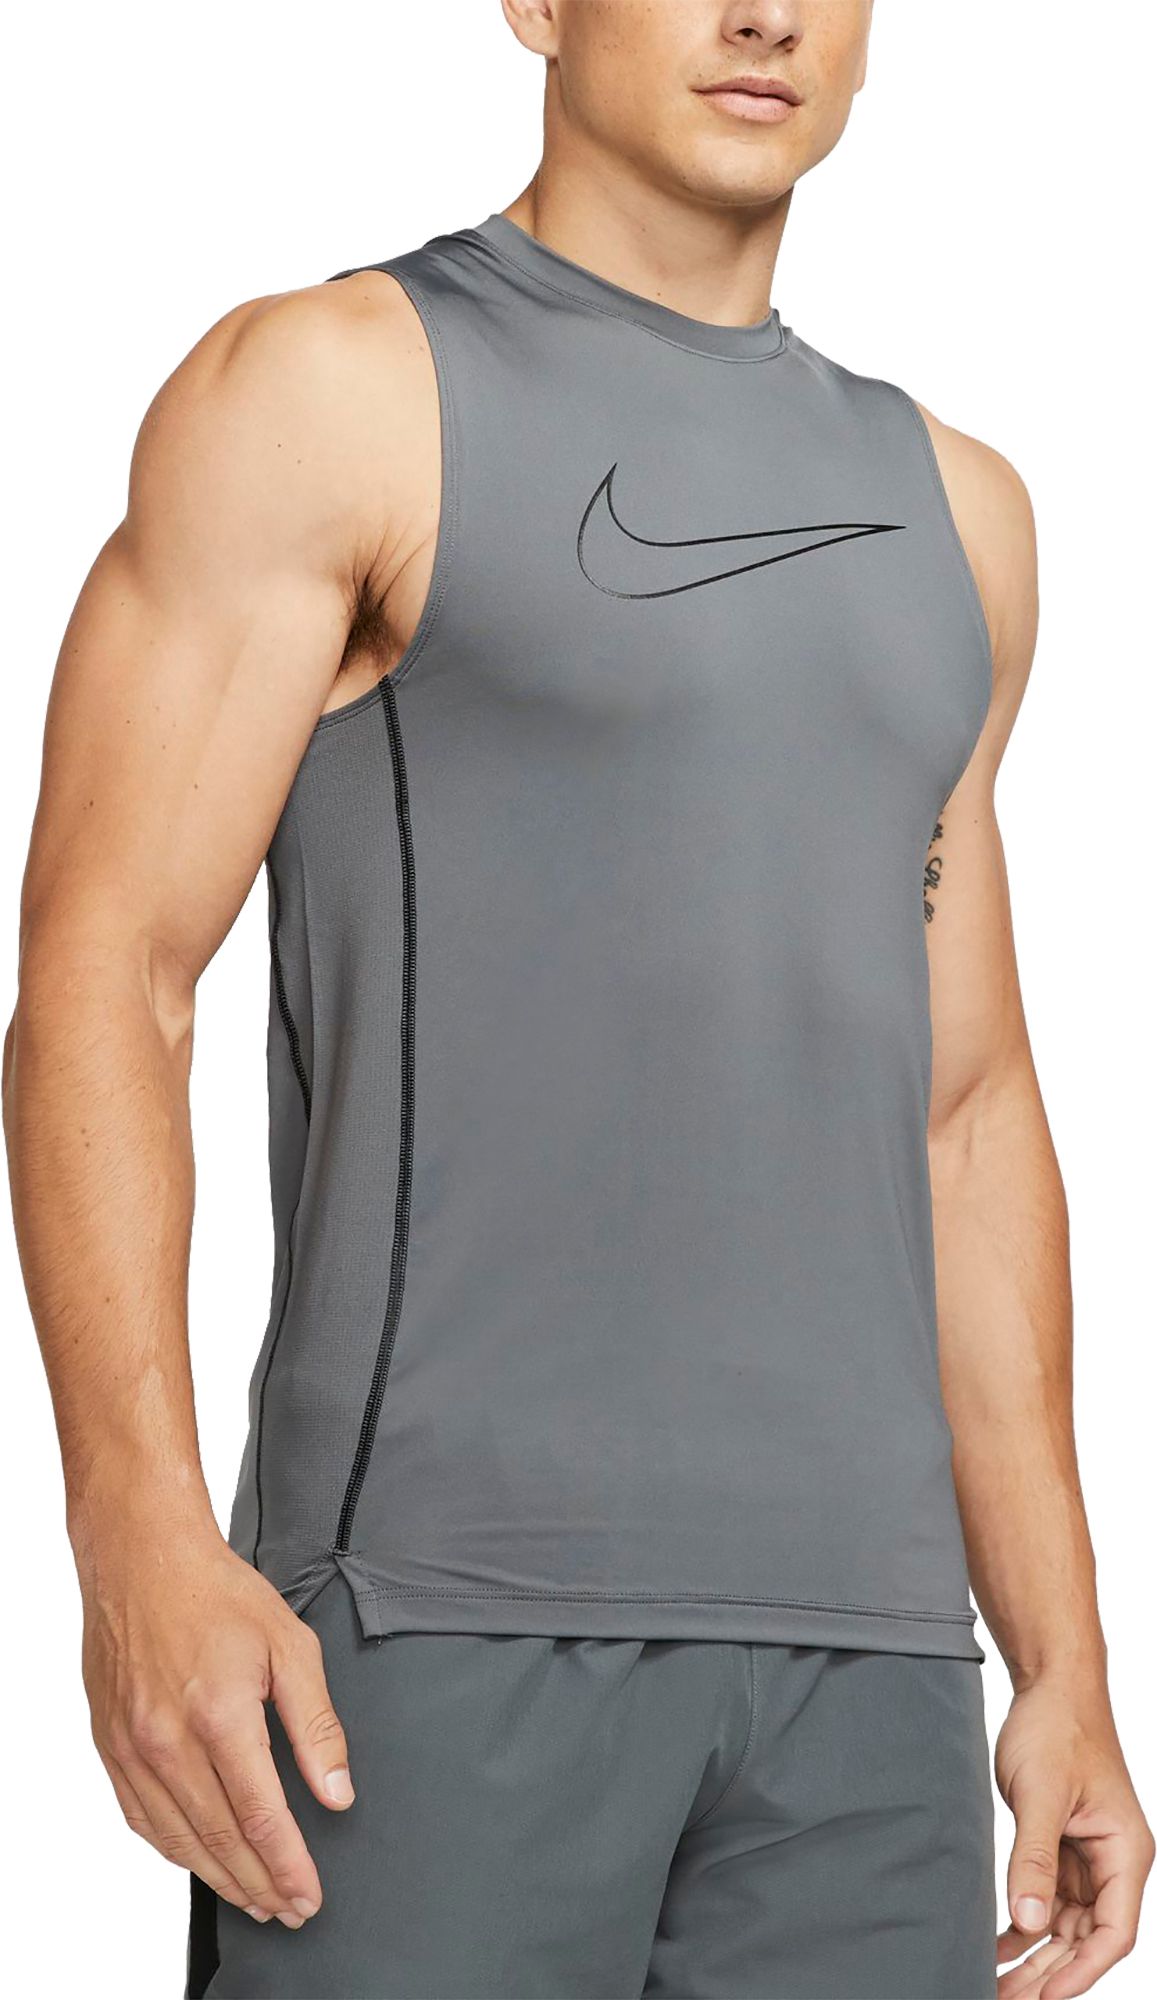 nike men's sleeveless compression shirt